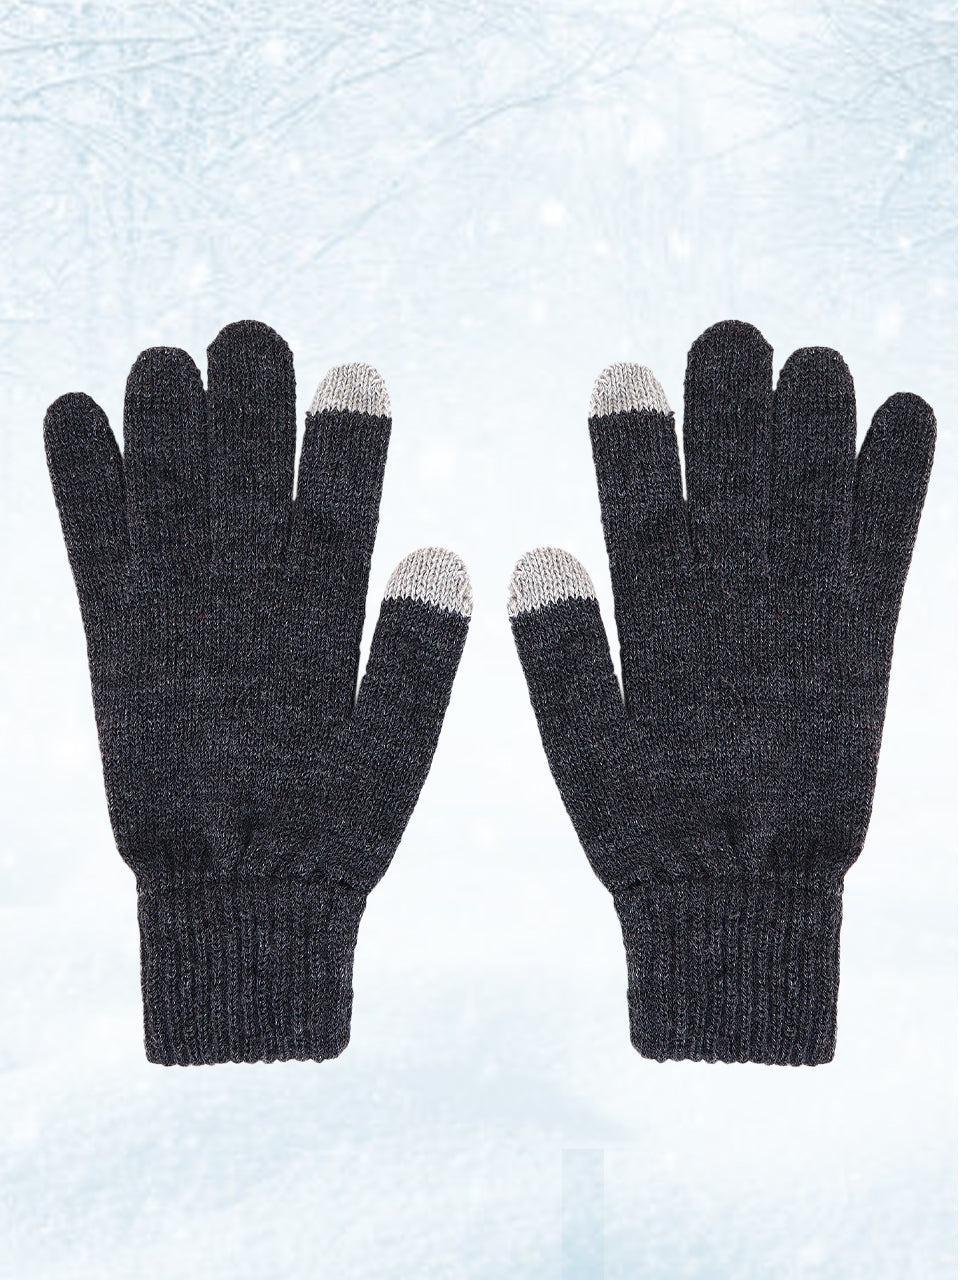 Unisex Touchscreen Winter Gloves